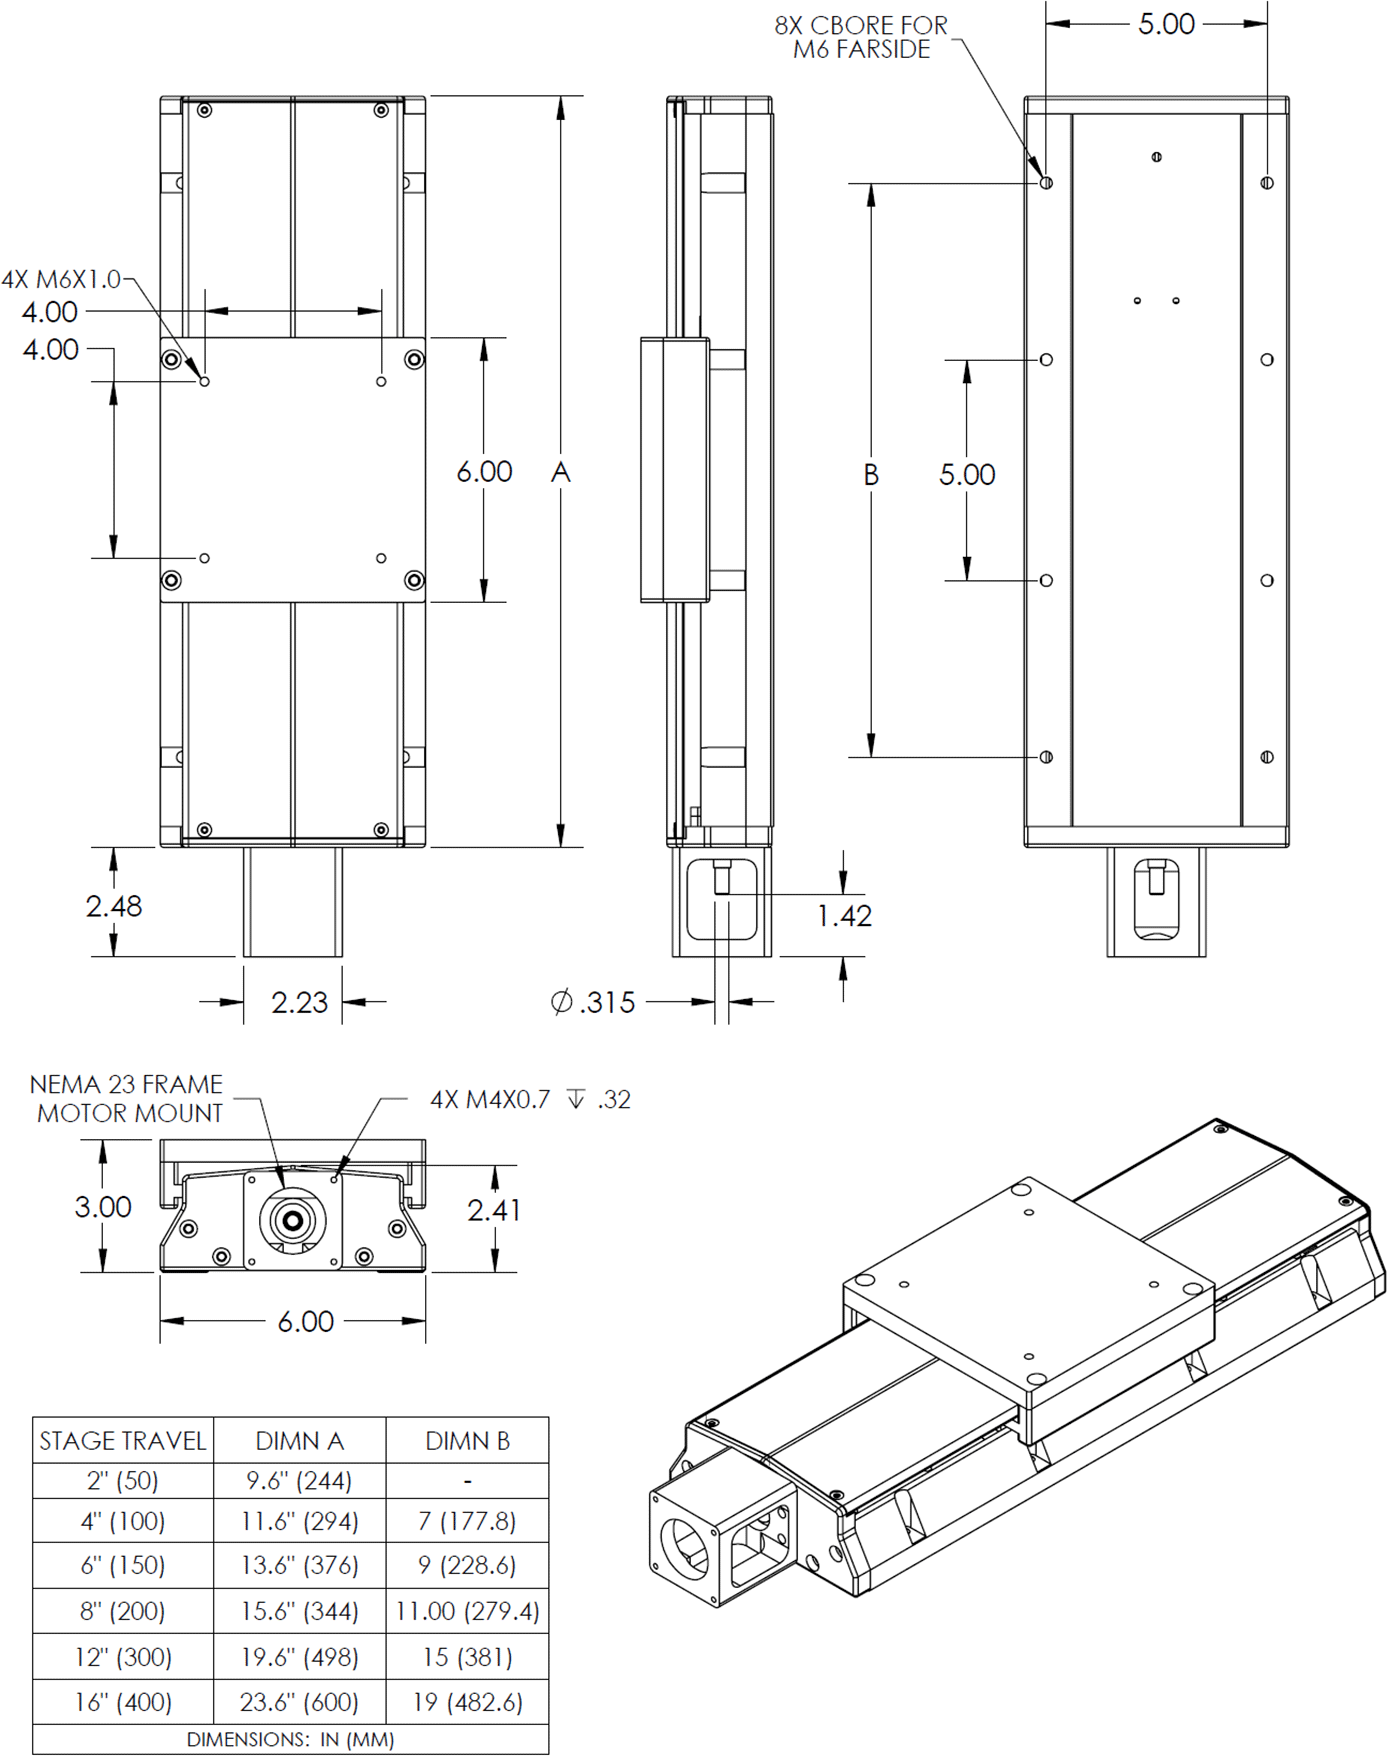 LS Series Stage Dimension Drawings